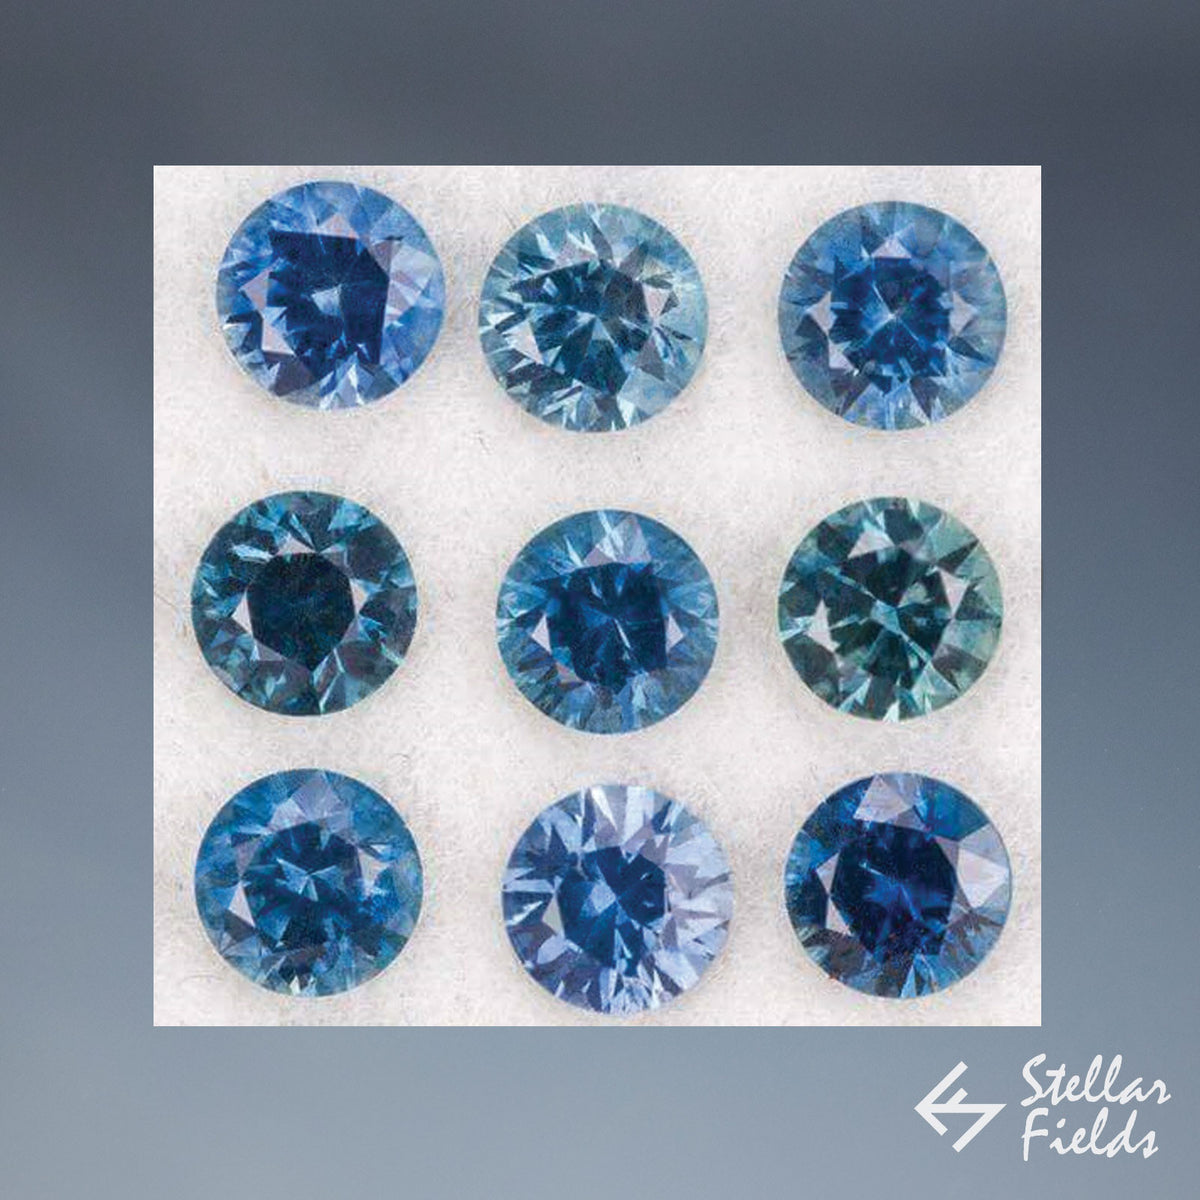 Fair Trade Blue Montana Sapphire Stellar Fields Jewelry